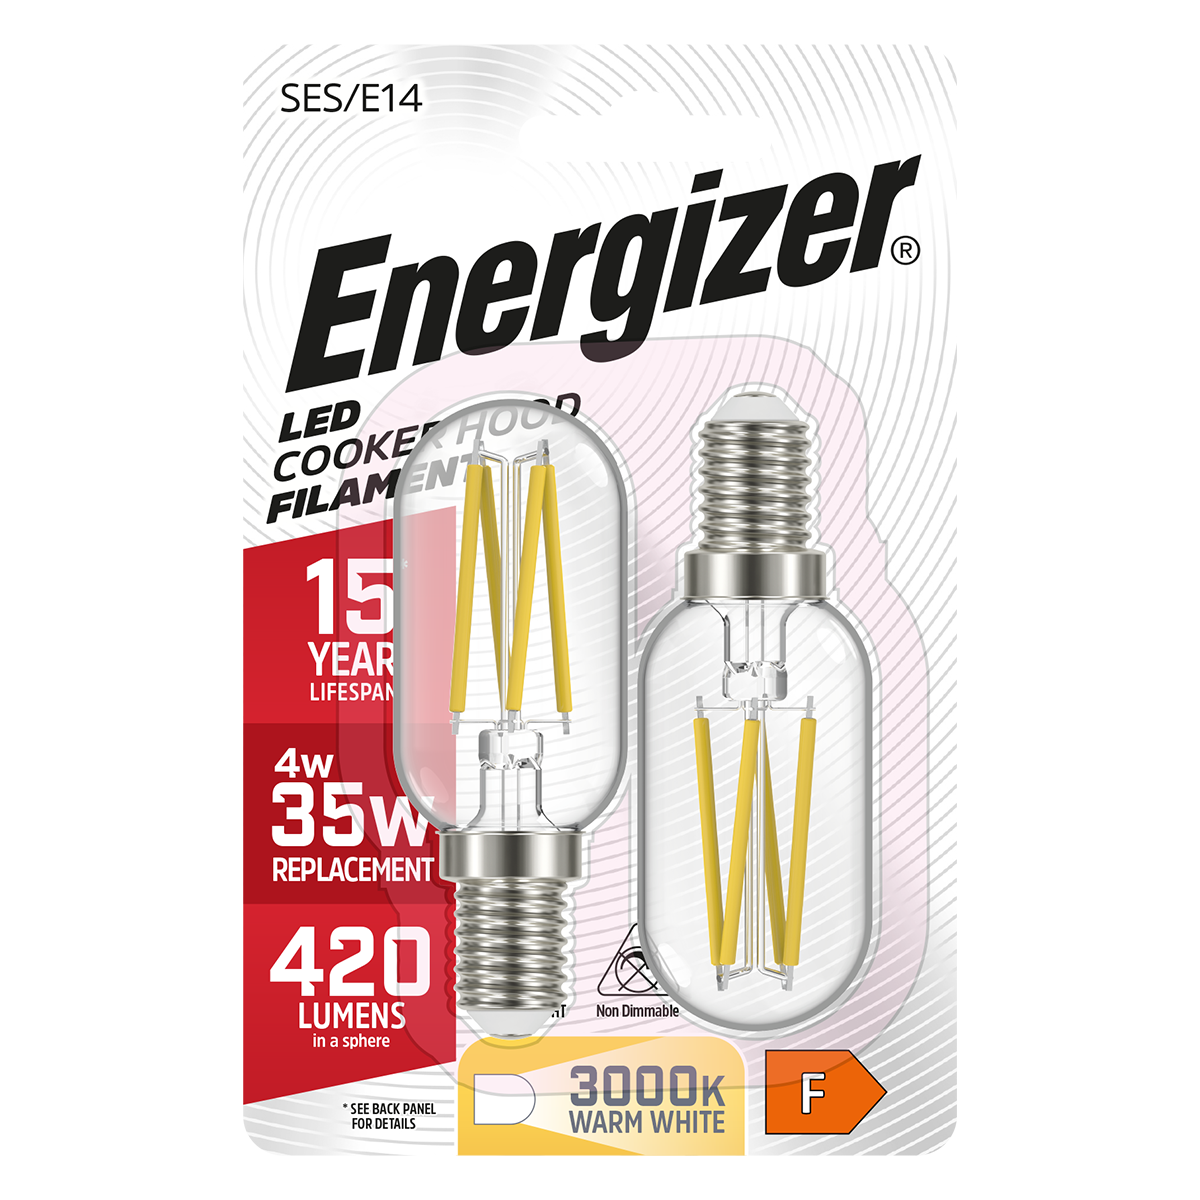 Energizer LED Filament Cookerhood E14 (SES) 420 Lumens 4W 2,700K (Warm White), Blister of 2